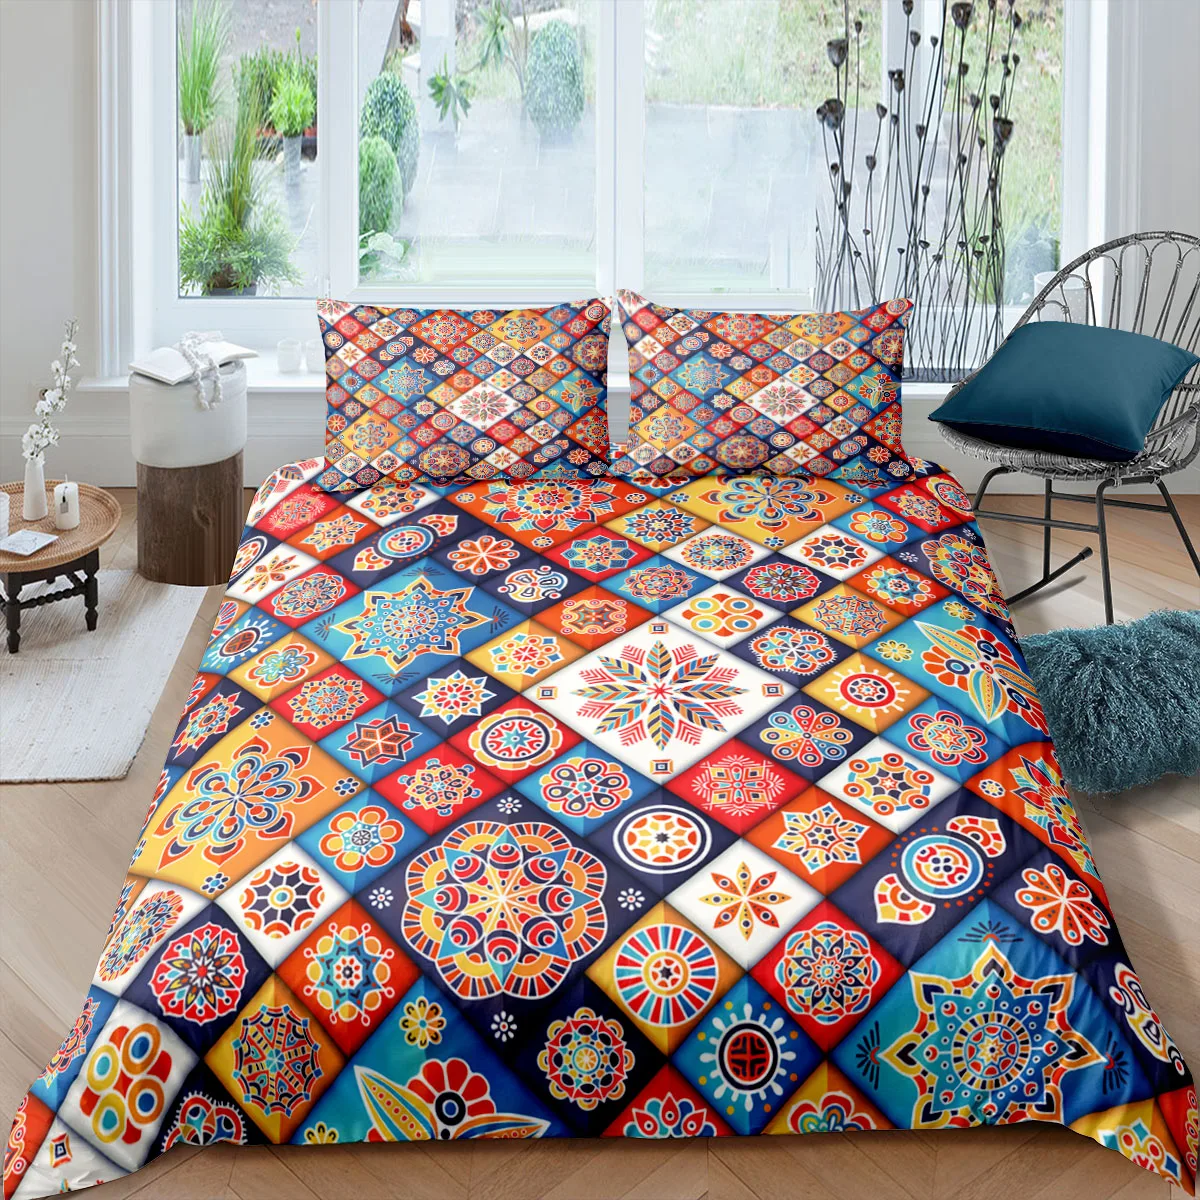 

Bohemia Style Bedding Set Fashion Mandala 3d Duvet Cover Sets Comforter Bed Linen Twin Queen King Single Size Gift Modern Flower